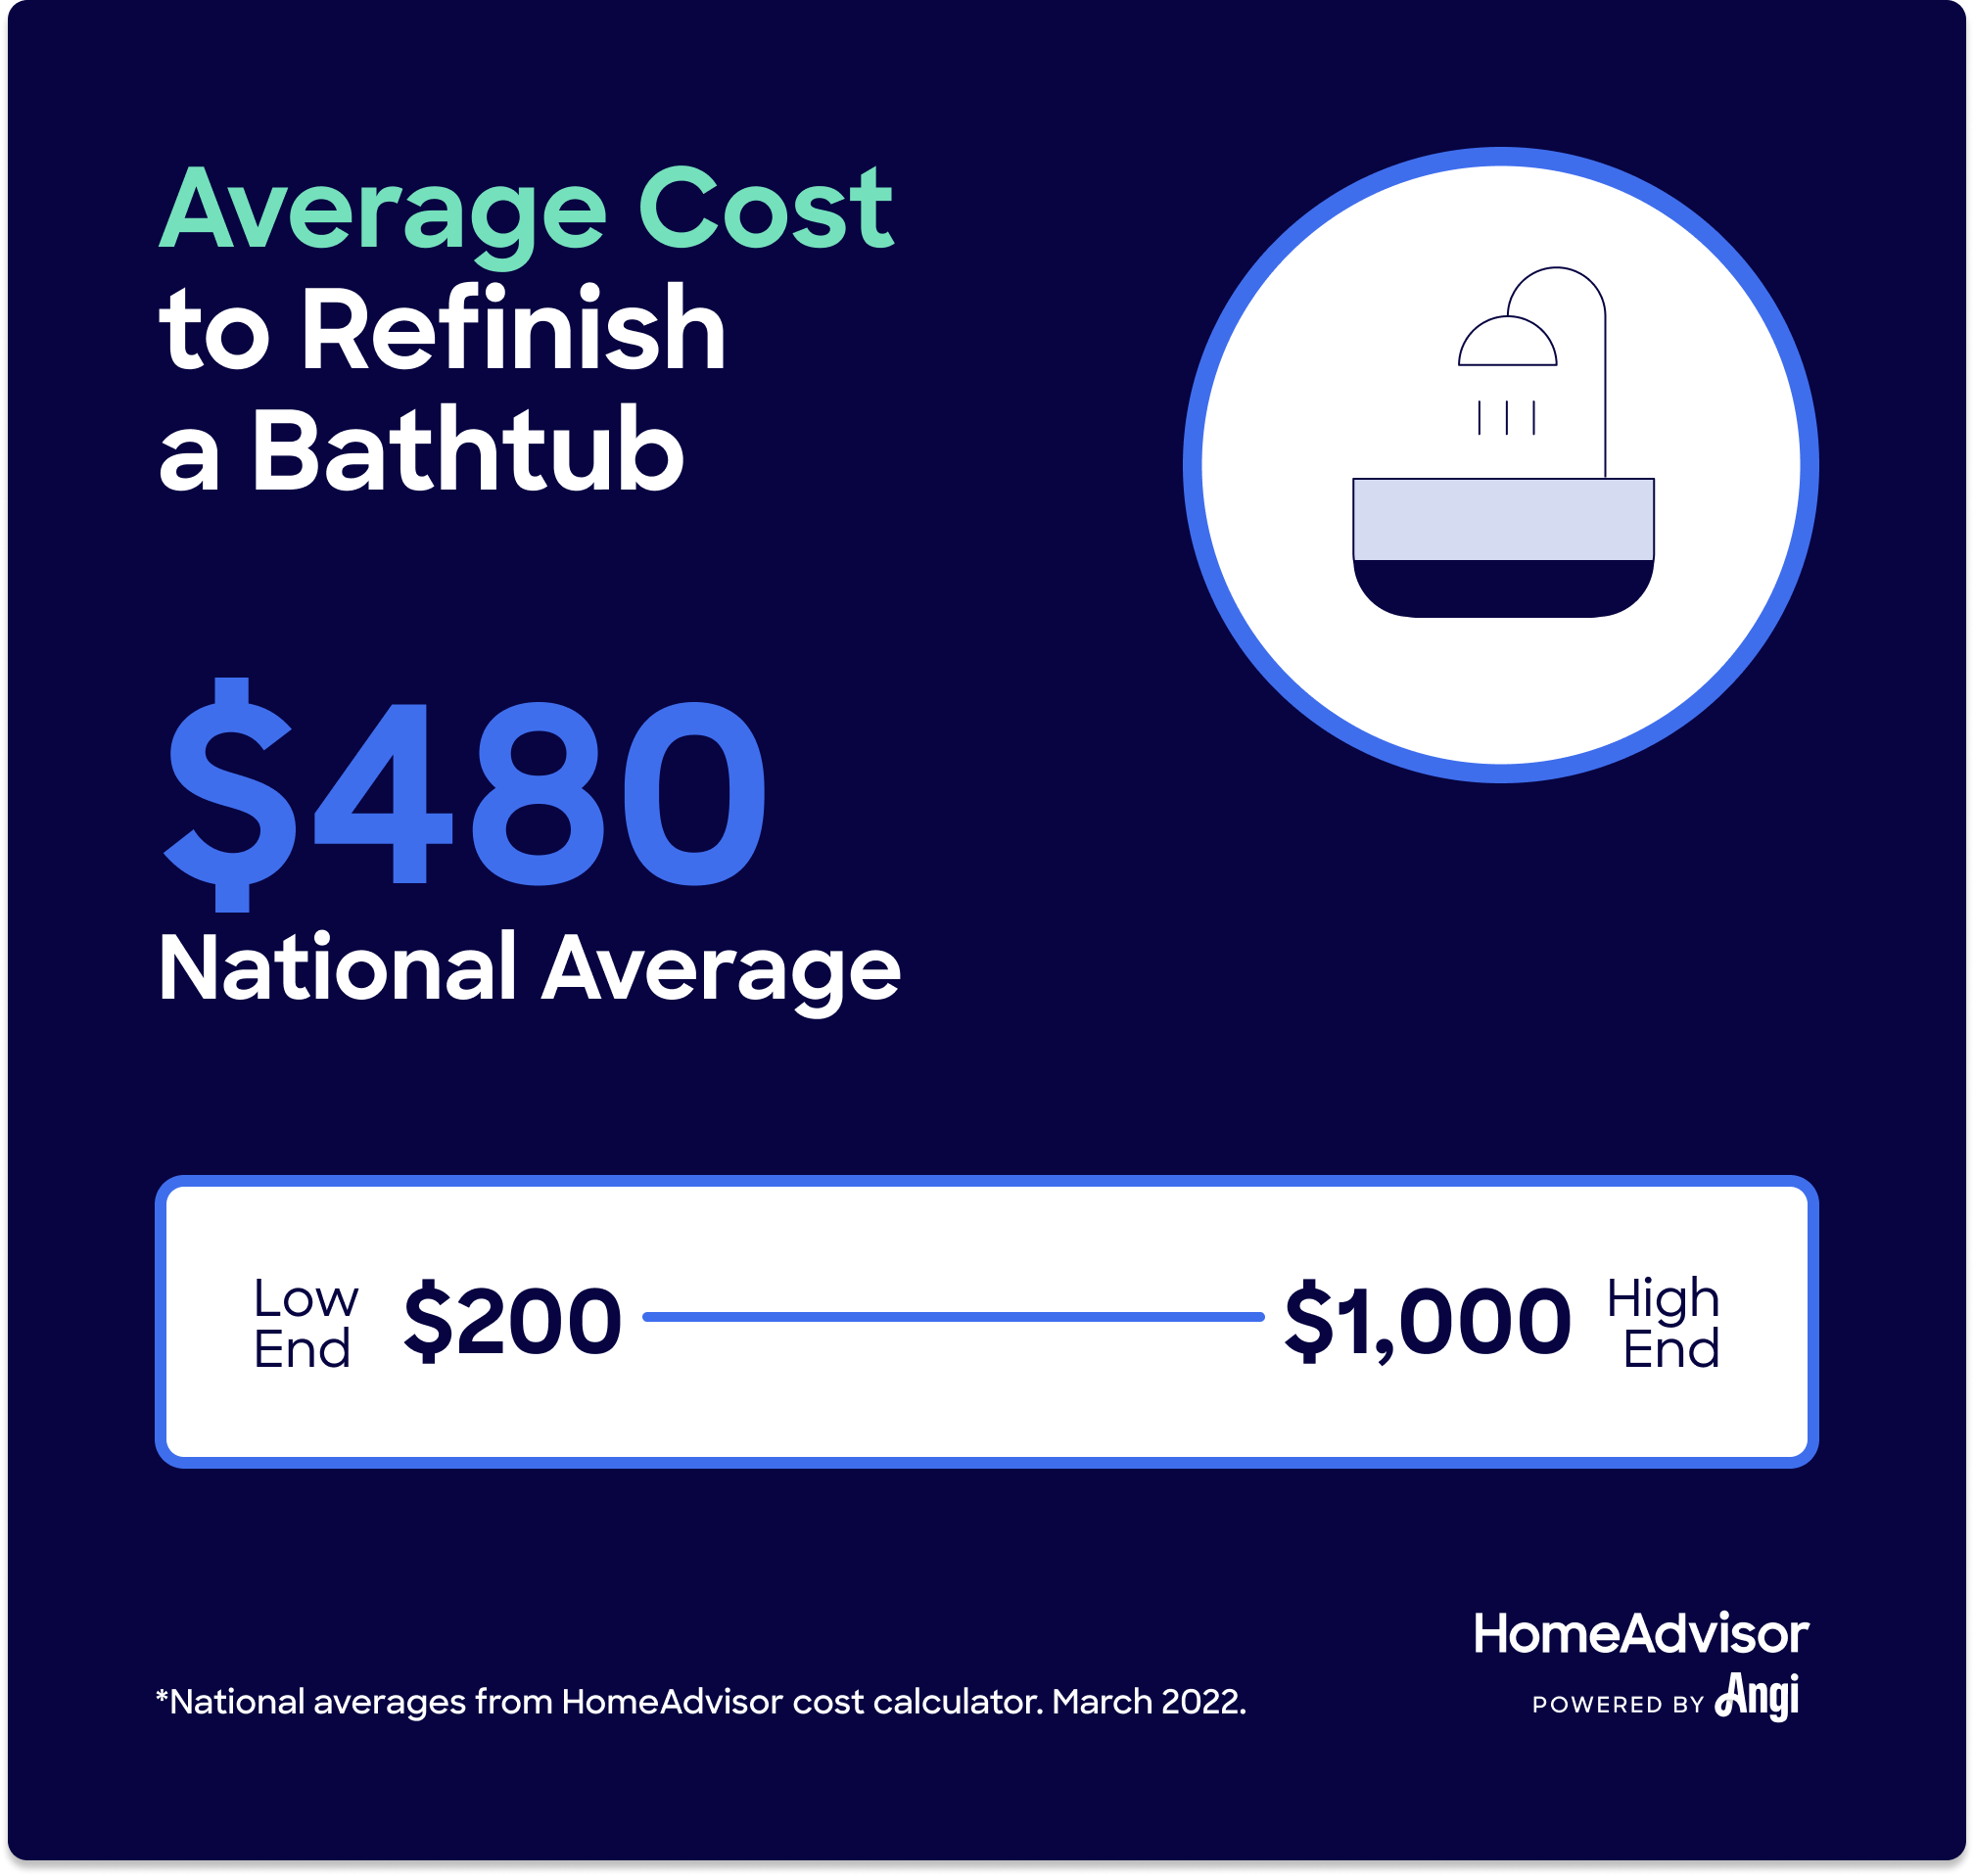 Bathtub refinishing costs average $480, ranging from $200 to $1,000